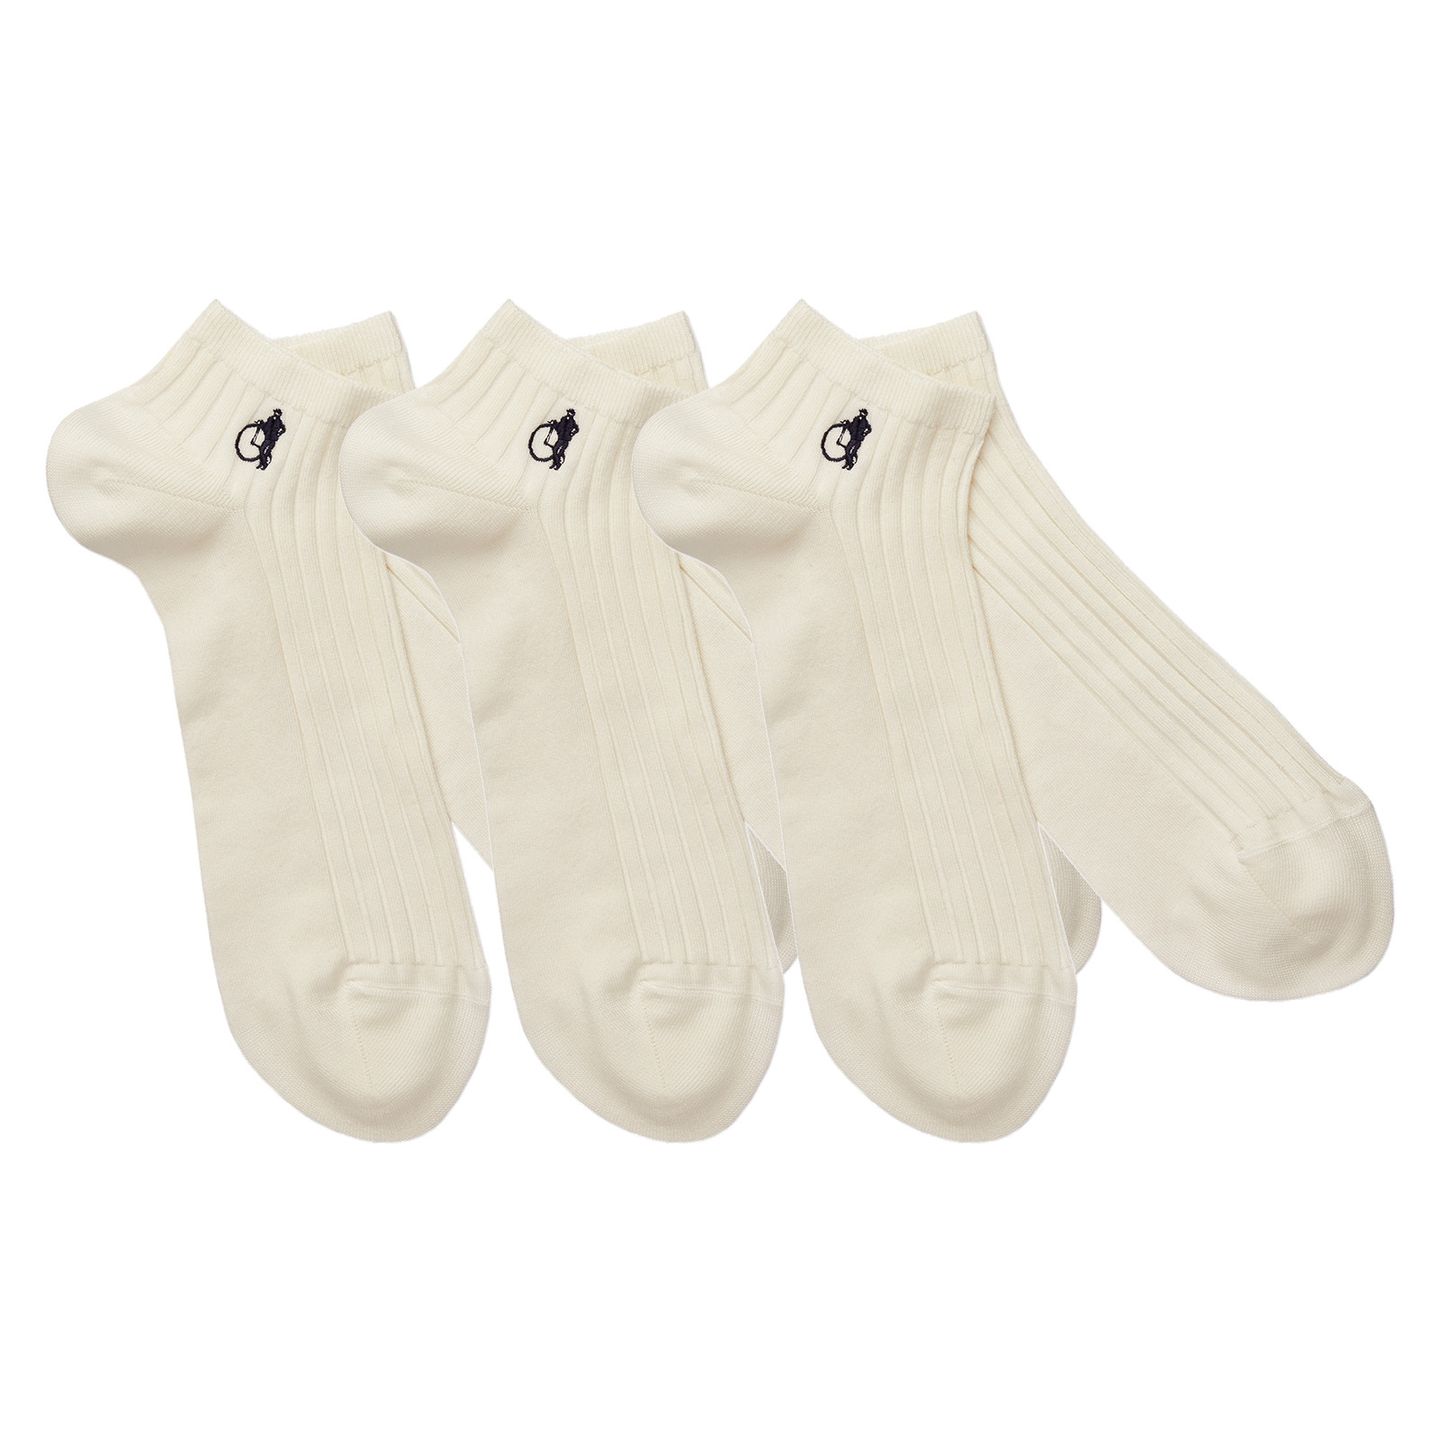 3 pairs of cream simply trainer socks